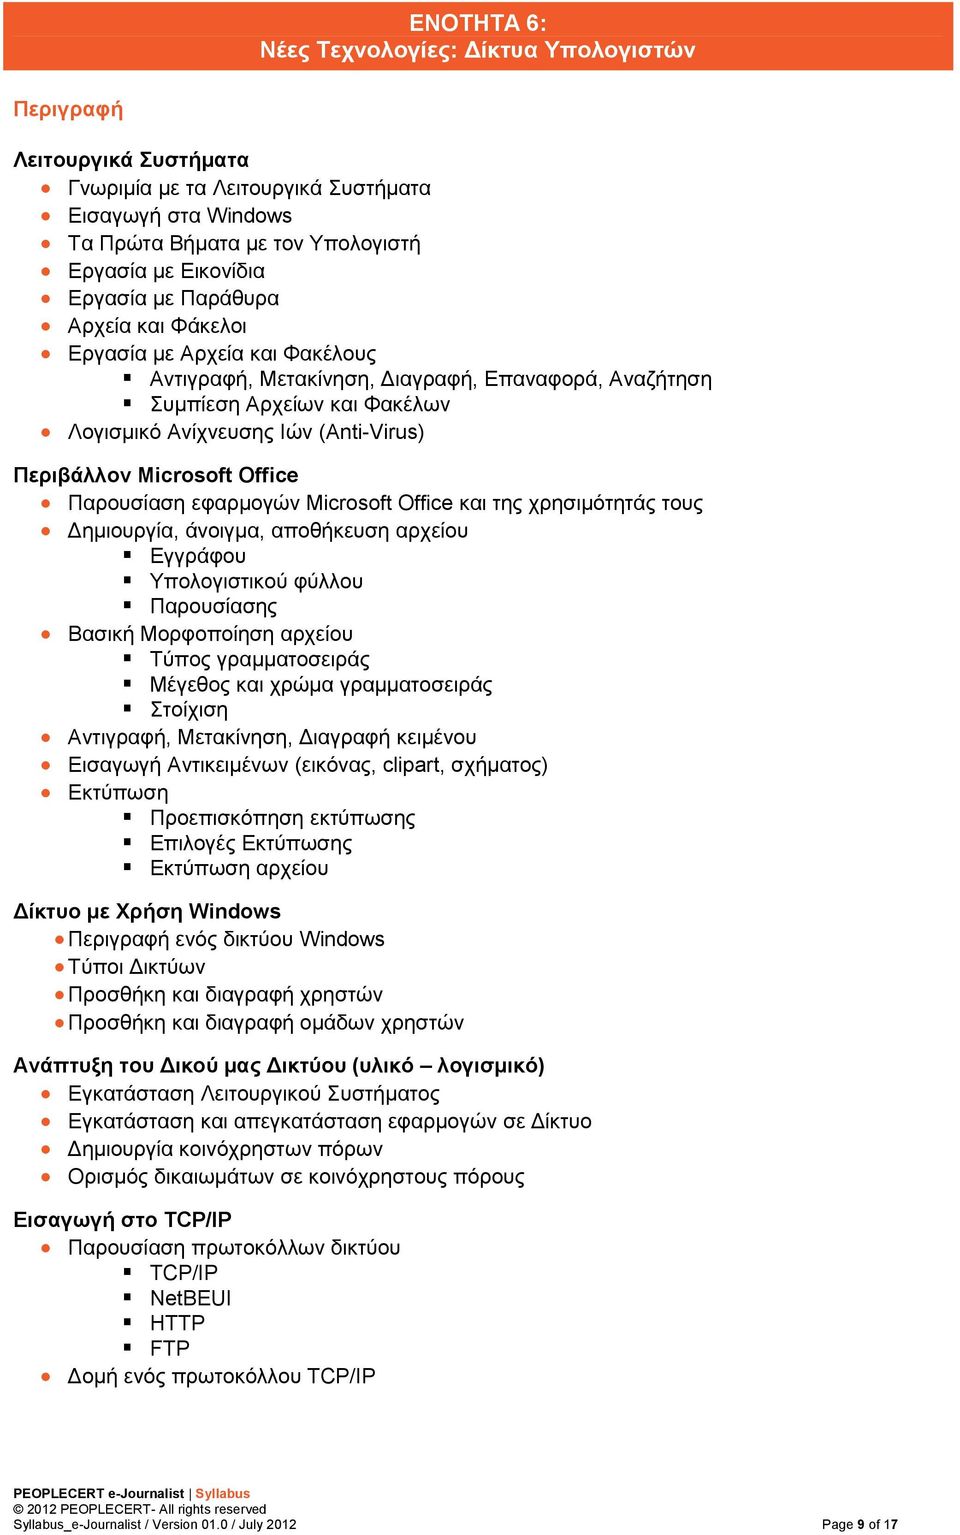 Microsoft Office Παρουσίαση εφαρμογών Microsoft Office και της χρησιμότητάς τους Δημιουργία, άνοιγμα, αποθήκευση αρχείου Εγγράφου Υπολογιστικού φύλλου Παρουσίασης Βασική Μορφοποίηση αρχείου Τύπος